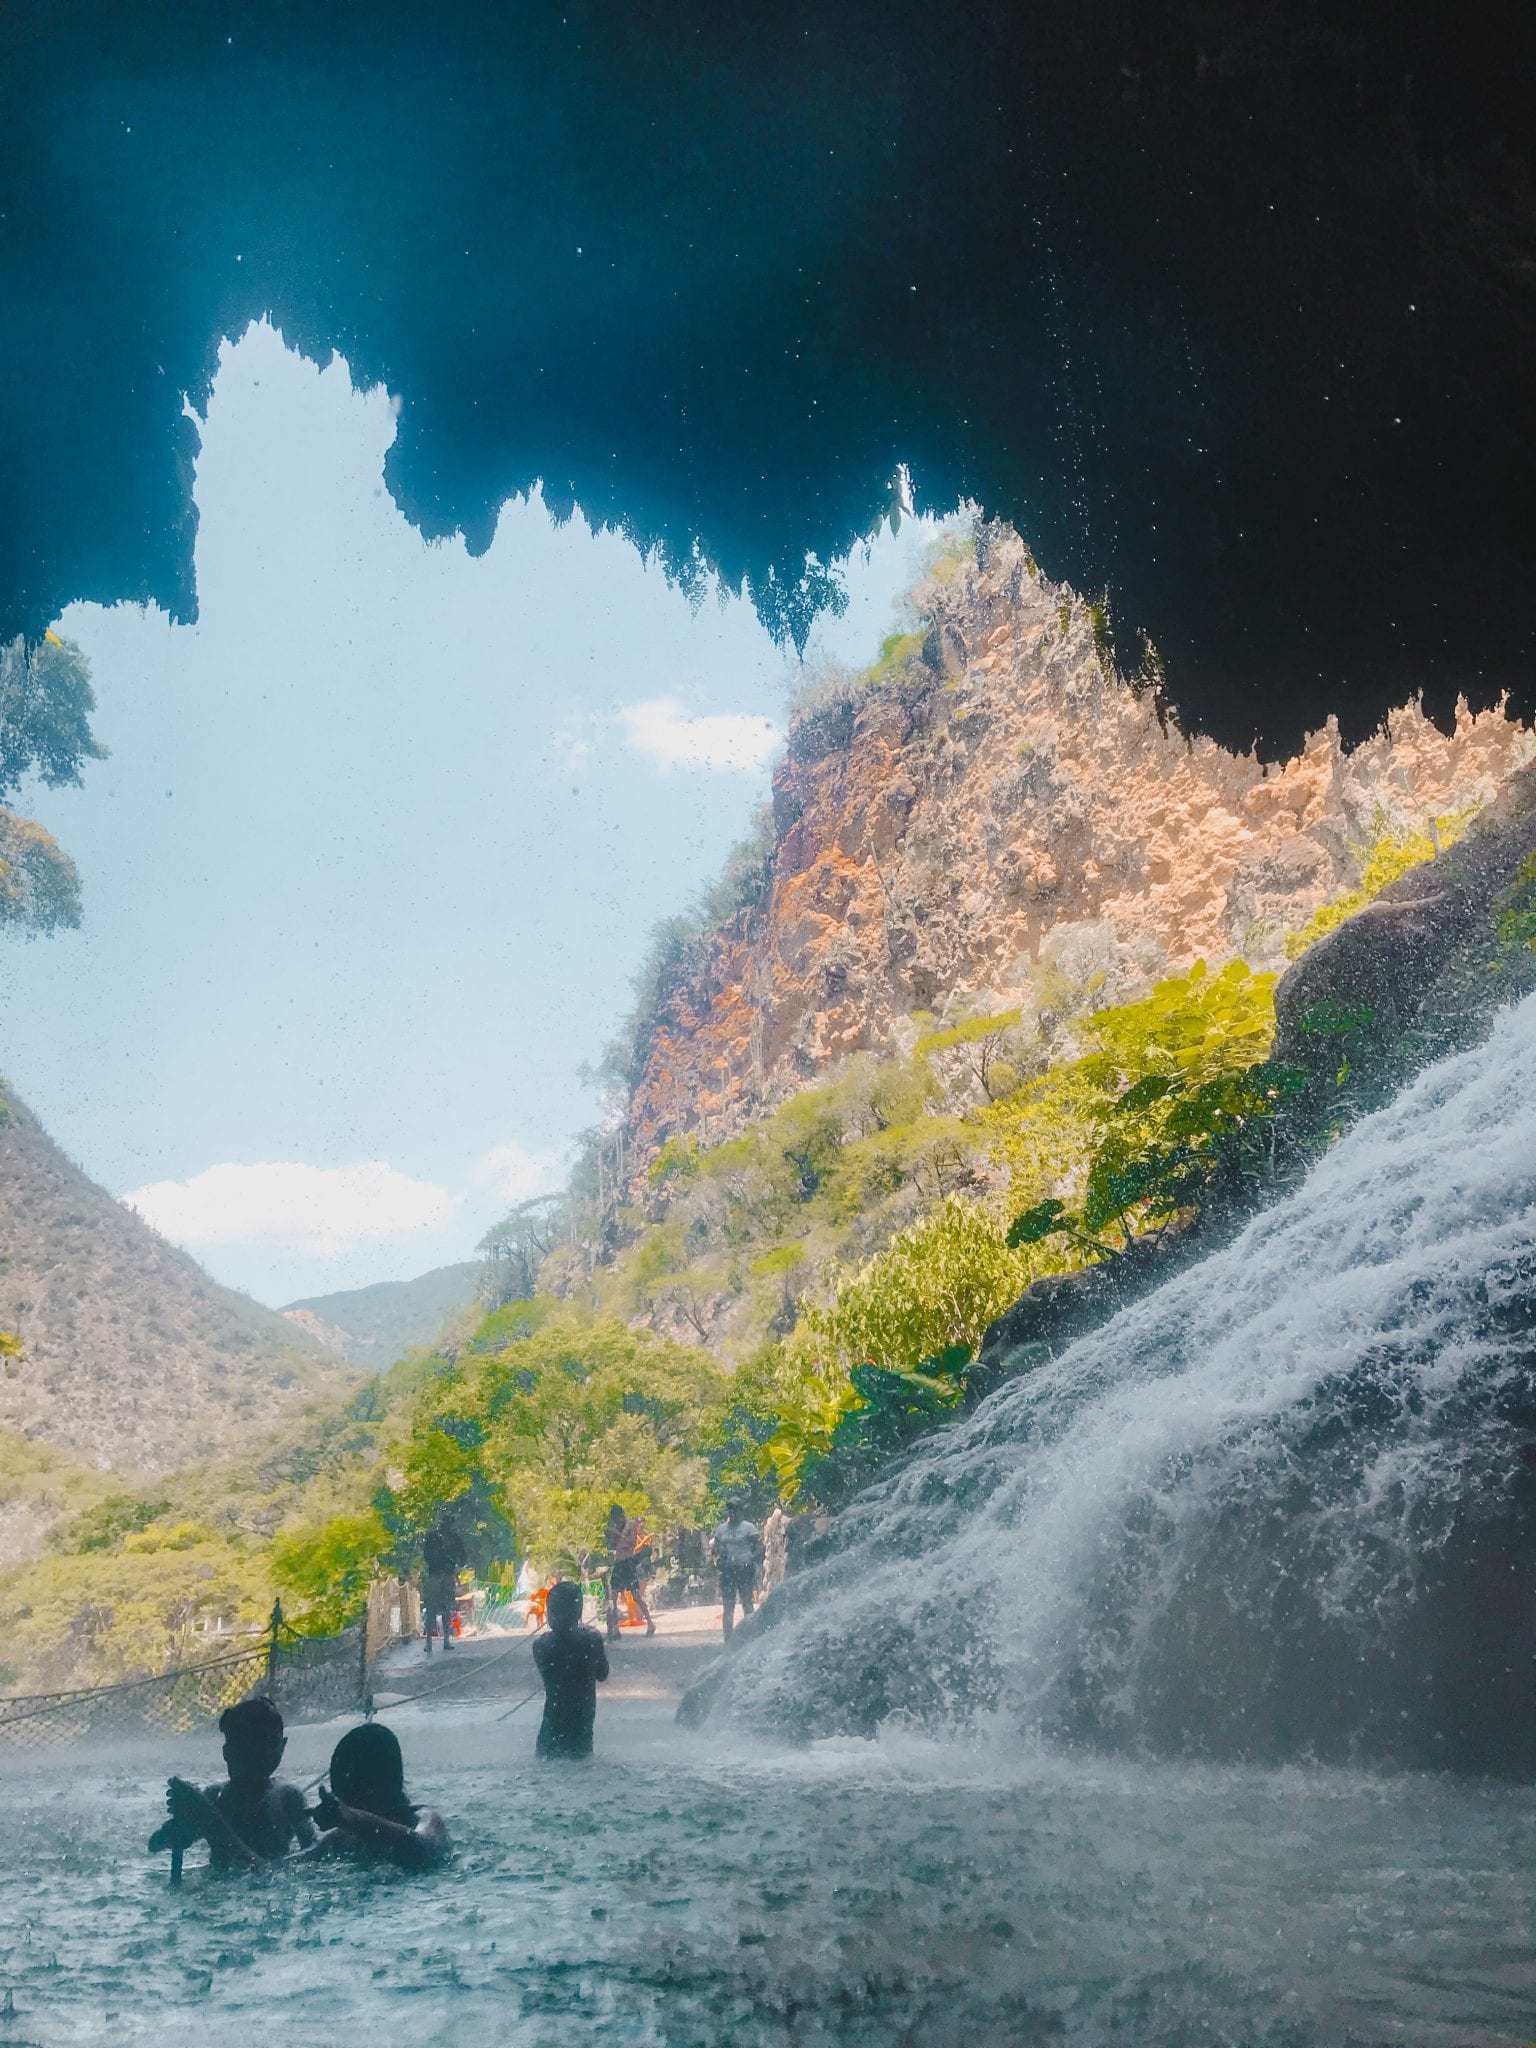 inside cave Grutas Tolantongo